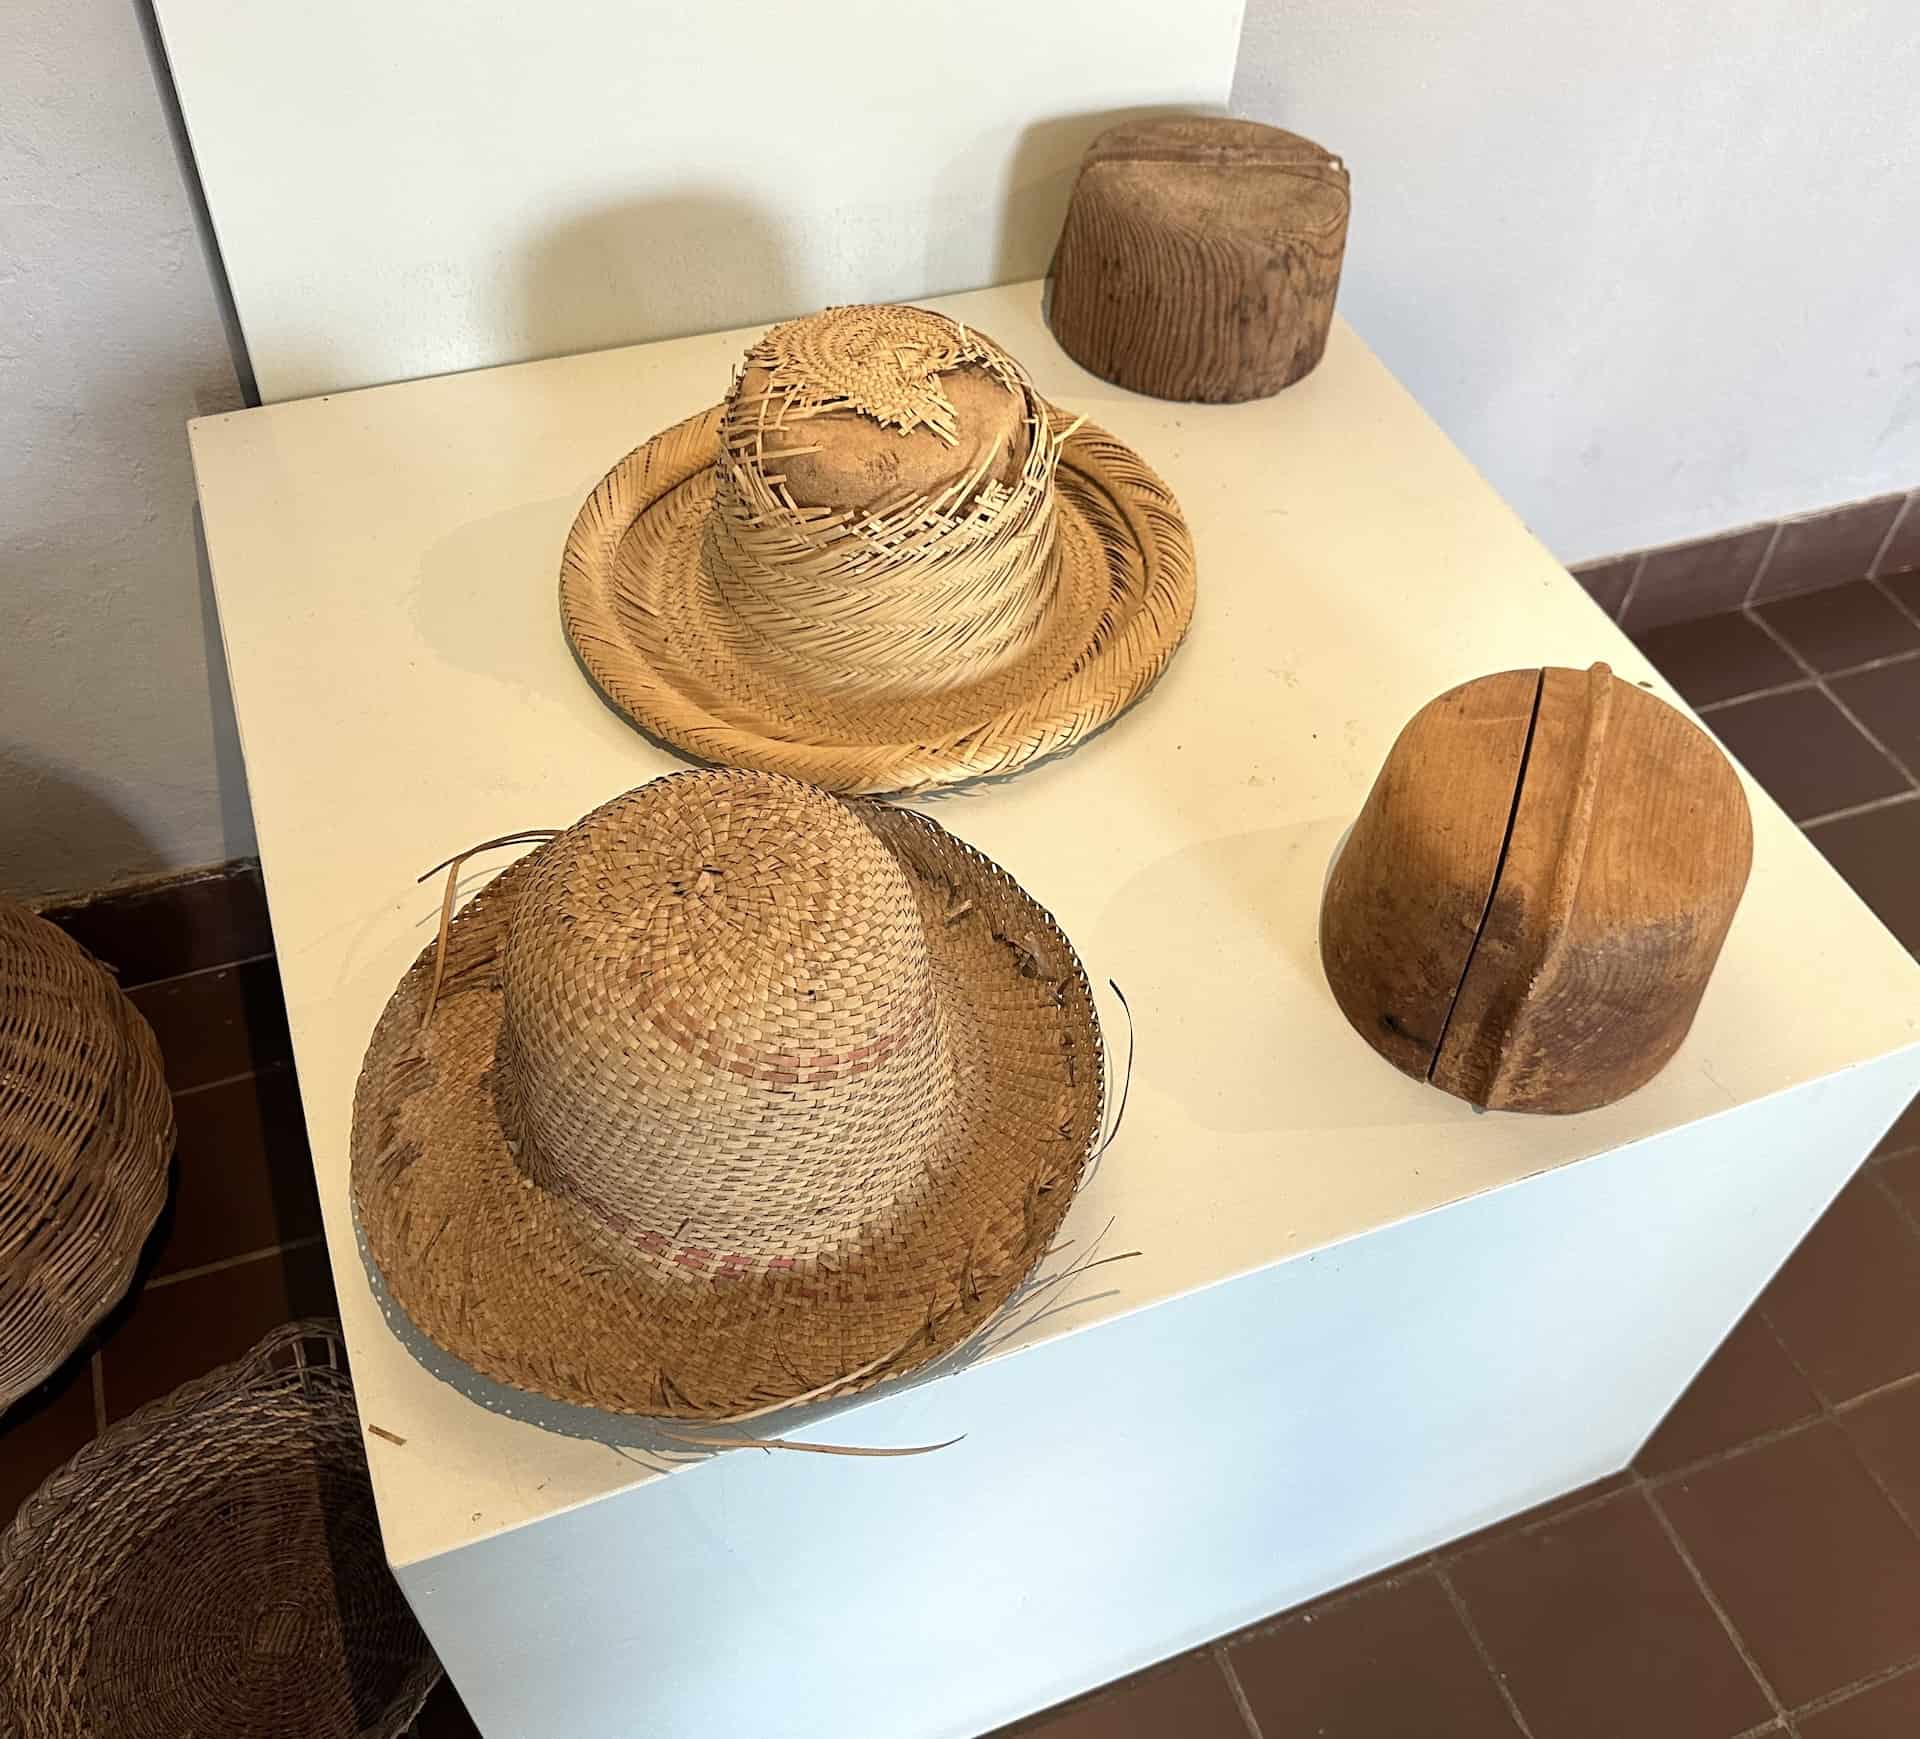 Hat making display at the Historical Museum of Aruba in Oranjestad